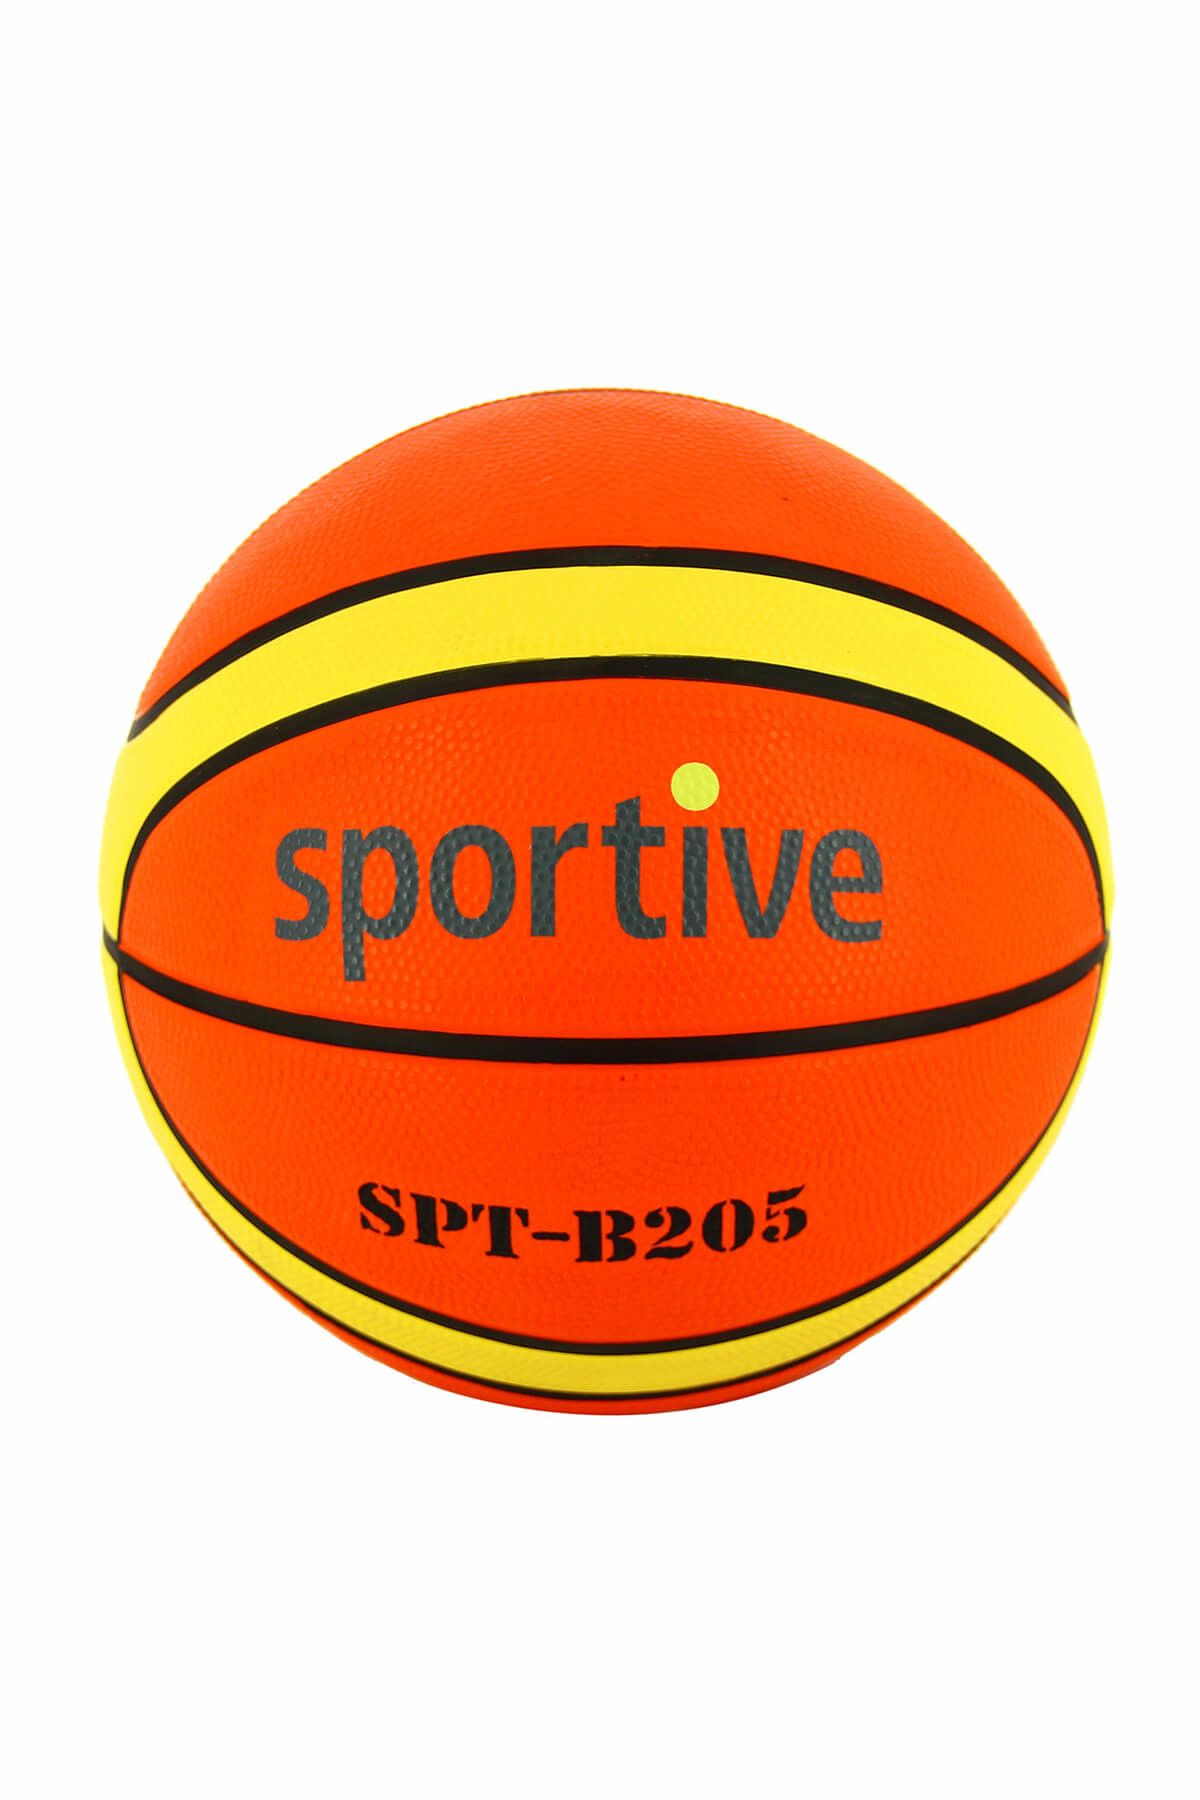 Sportive Spt-B205 No:5 Turuncu Basketbol Topu - SPT-B205